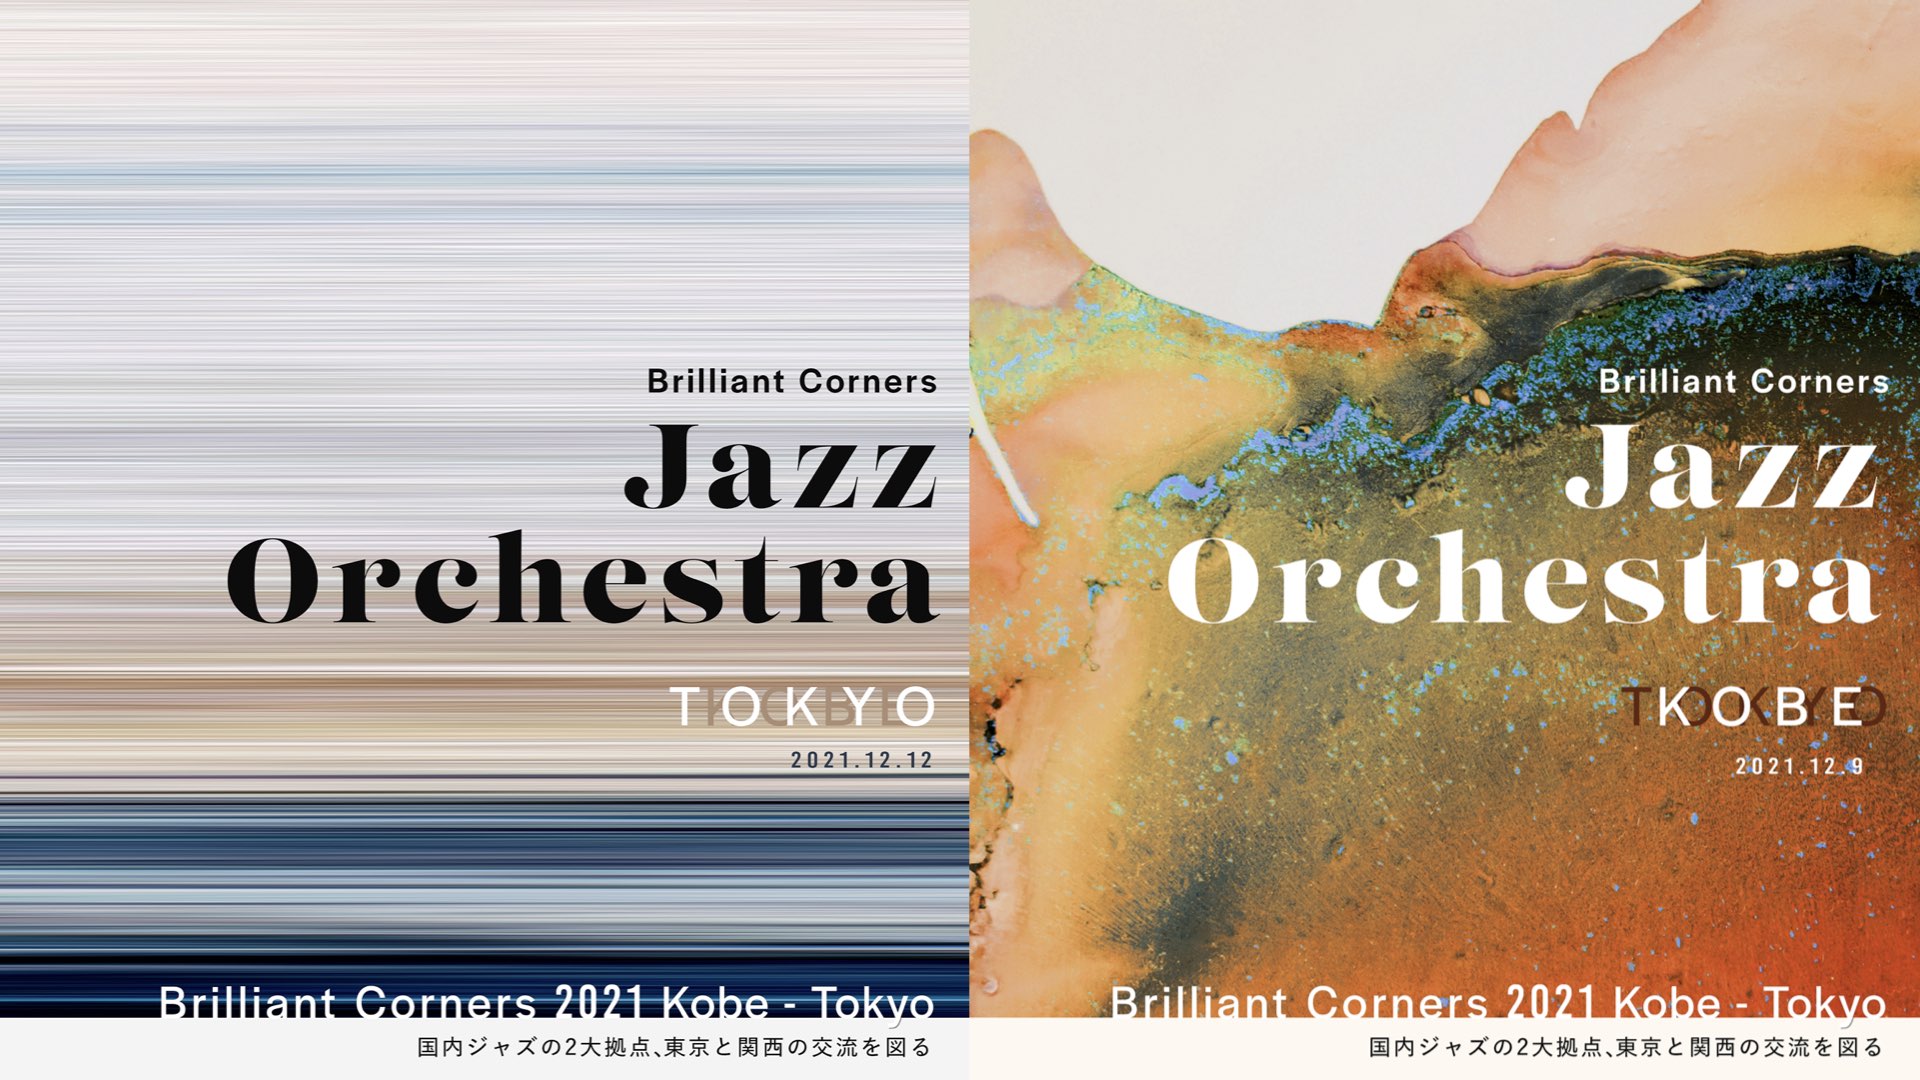 Brilliant Corners Jazz Orchestra Concerts in Kobe & Tokyo 2021